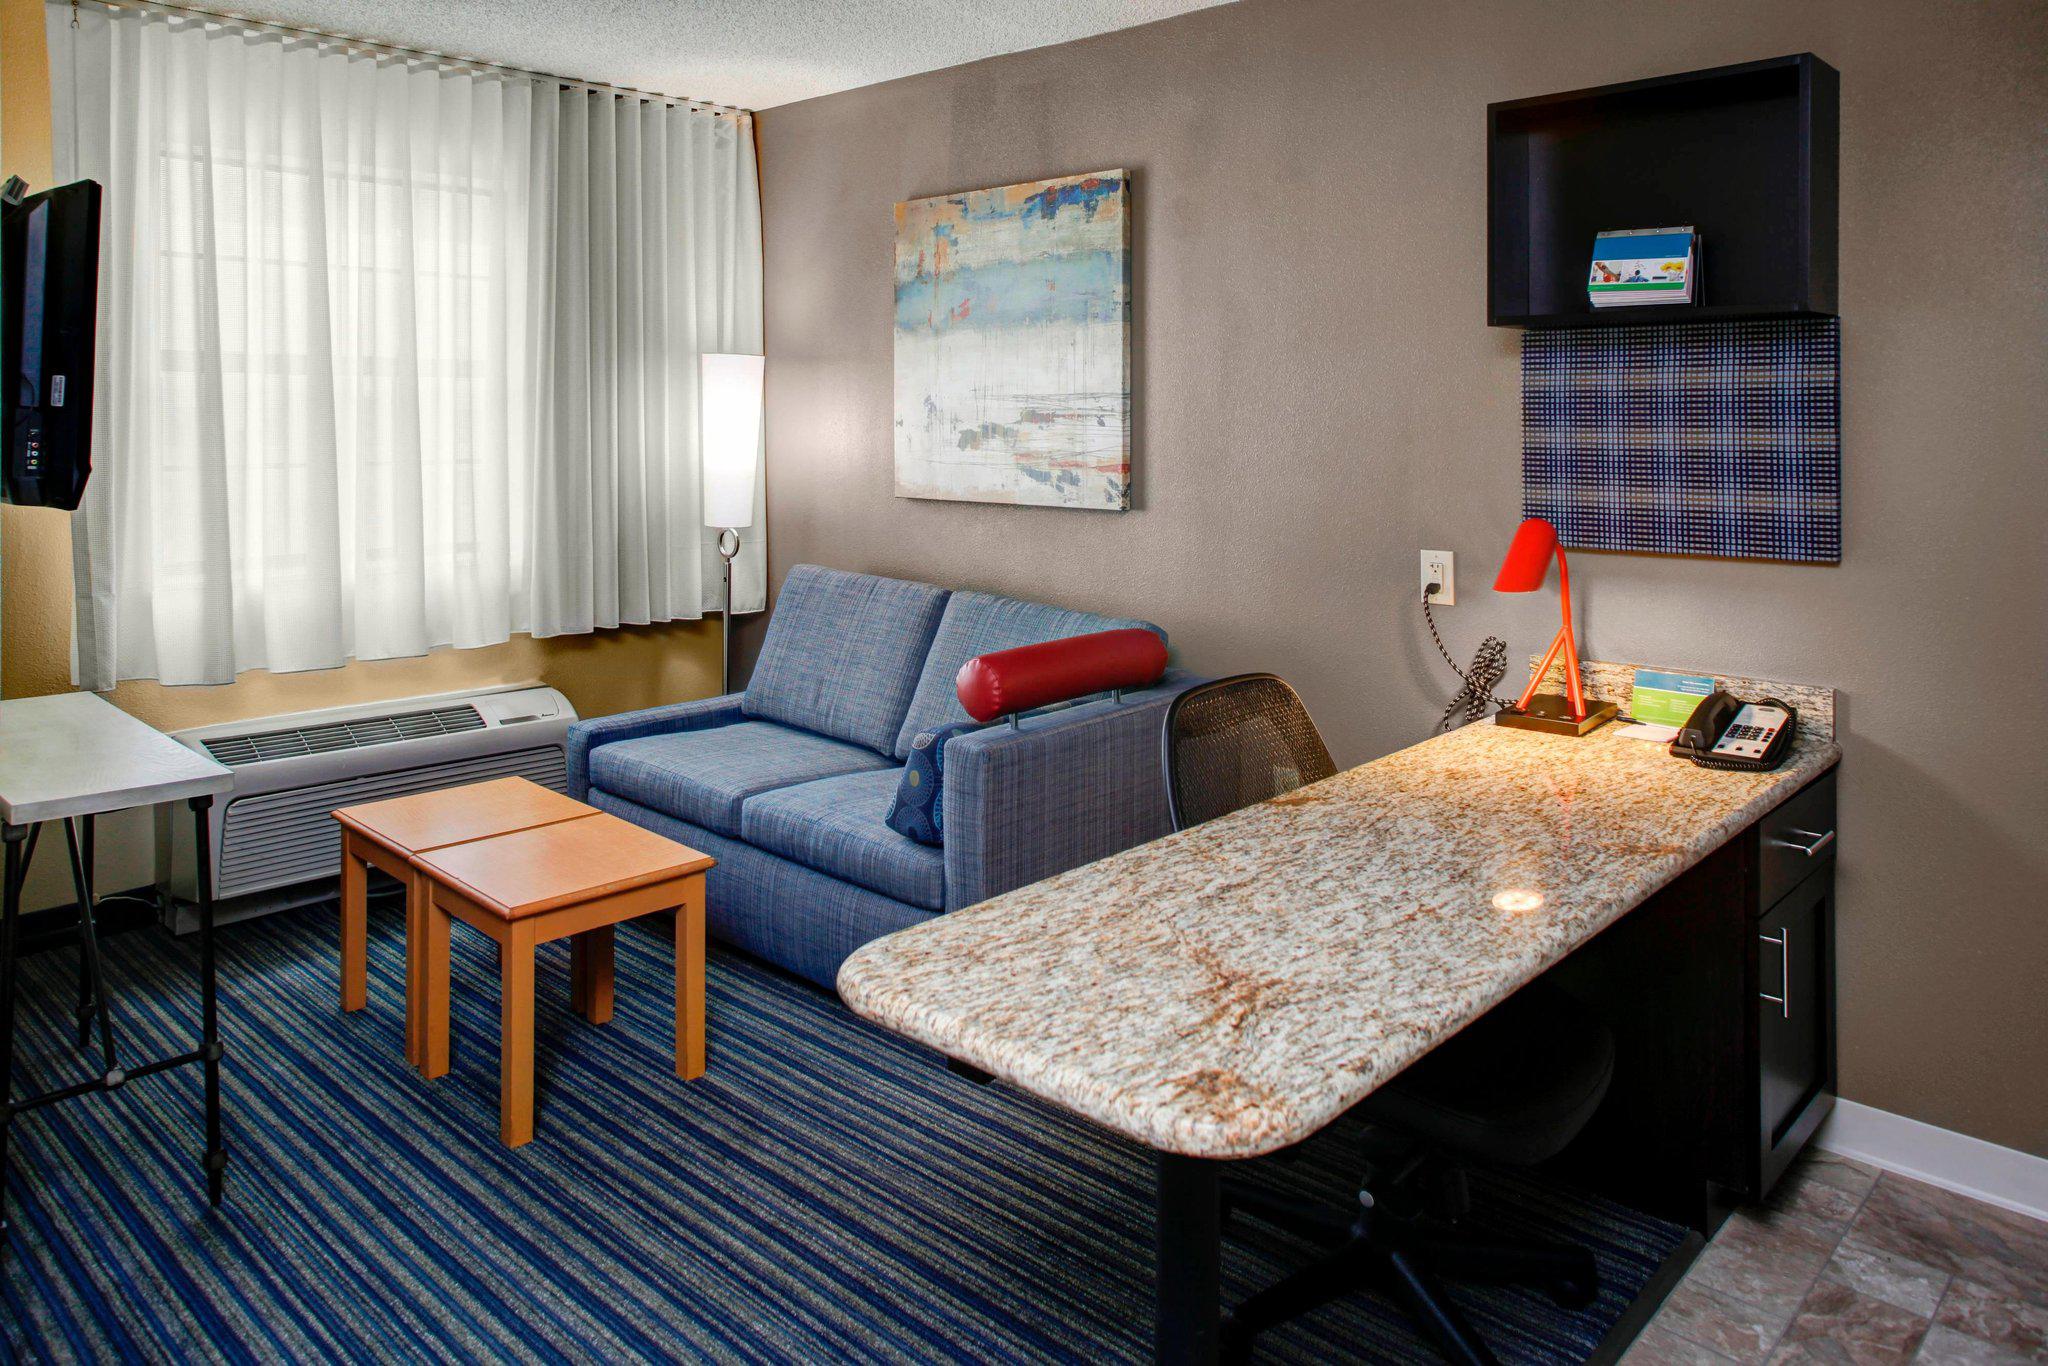 TownePlace Suites by Marriott Atlanta Buckhead